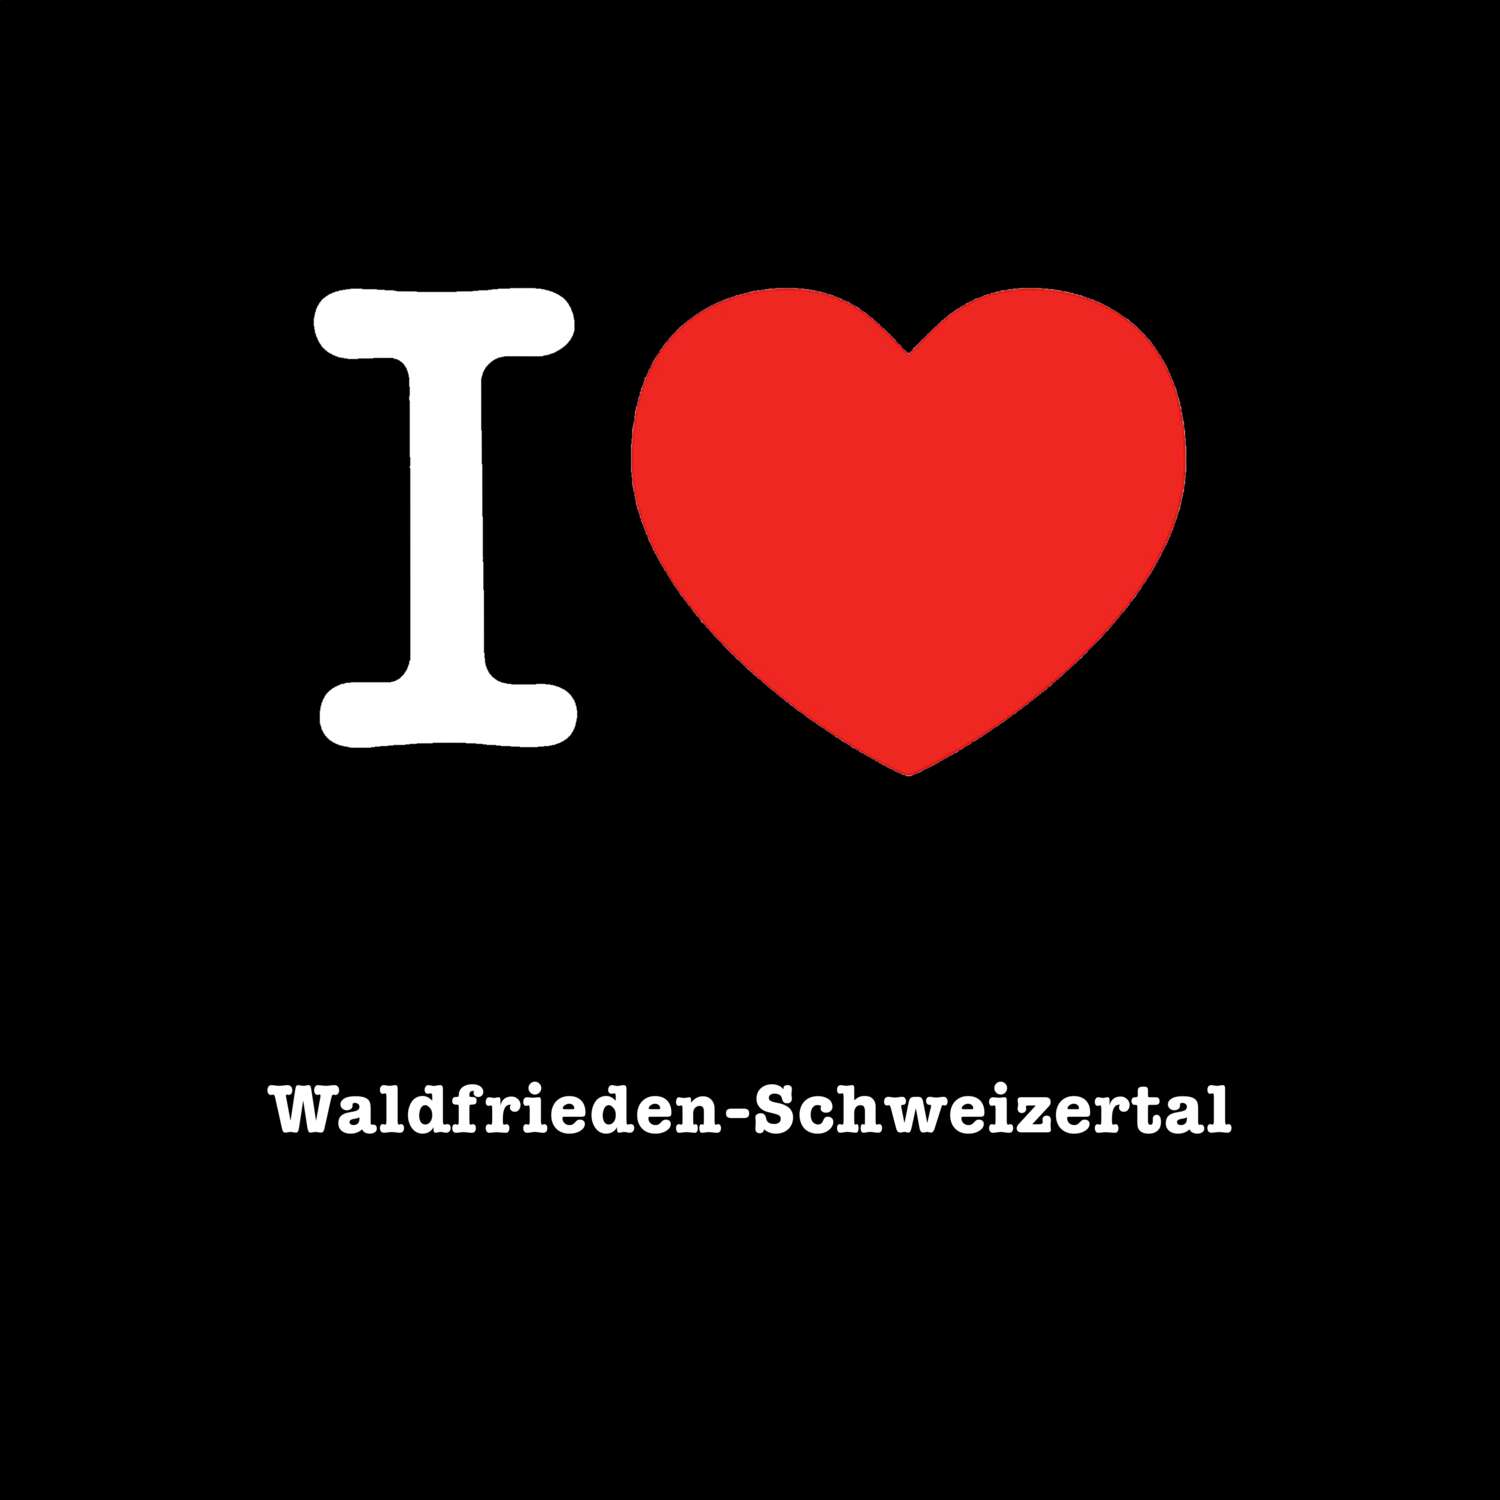 Waldfrieden-Schweizertal T-Shirt »I love«